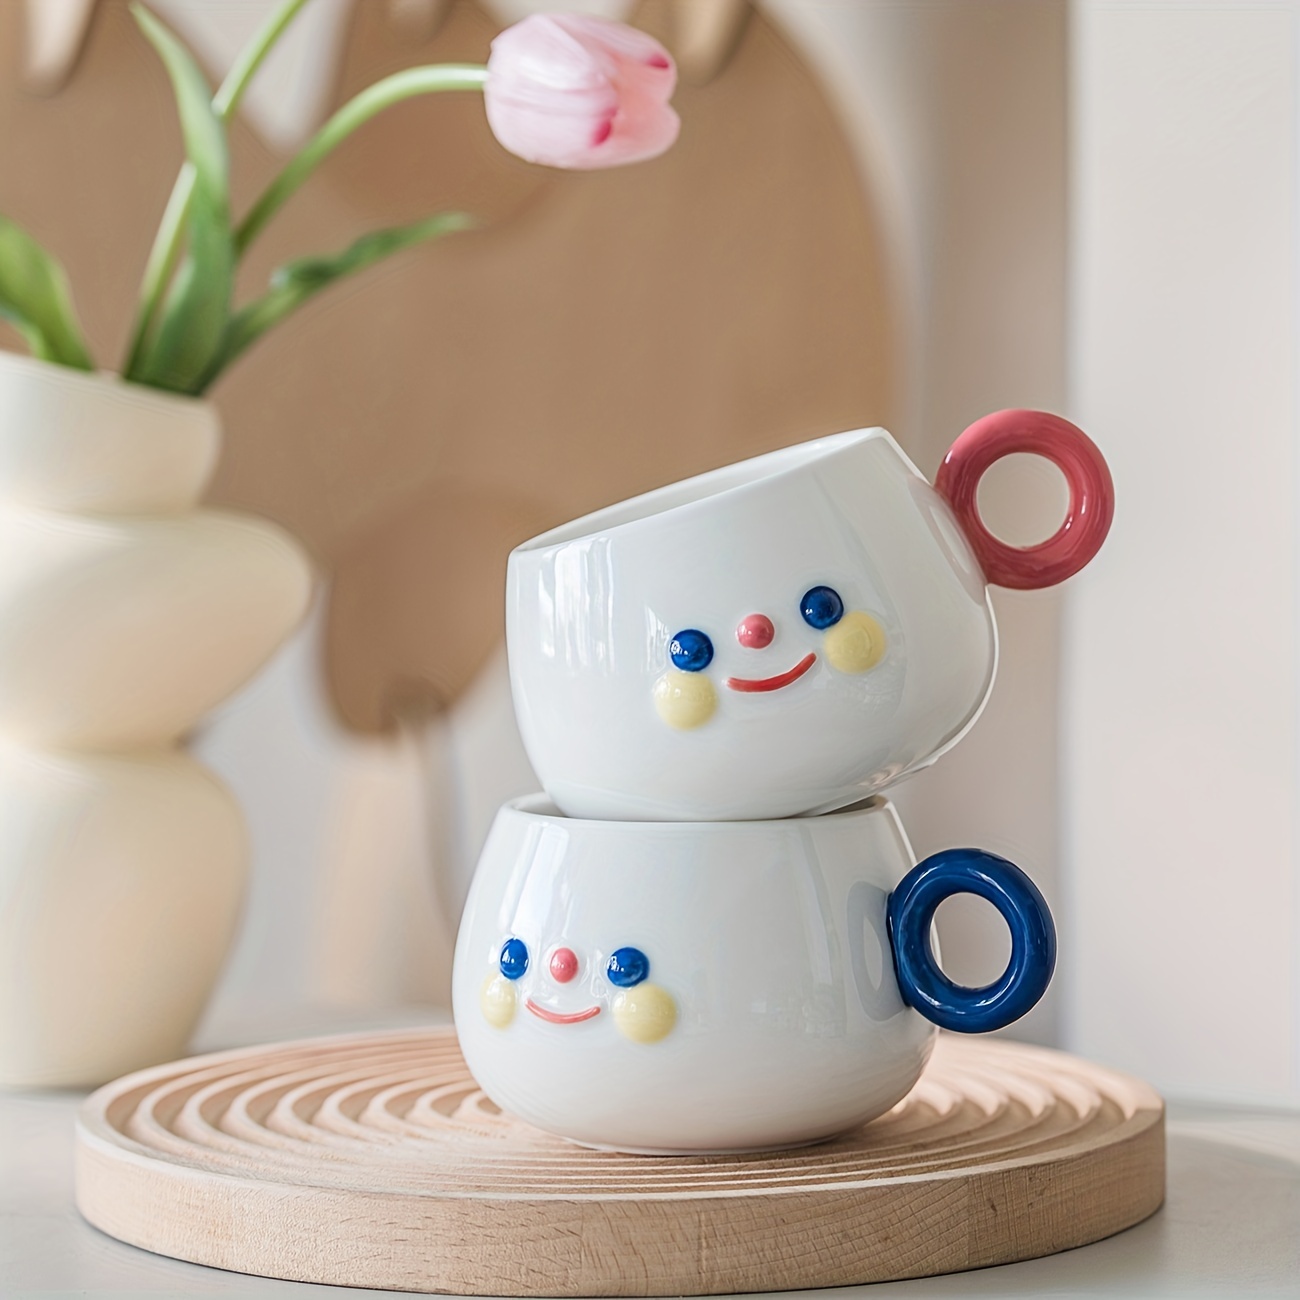 Mug and Mini - 15oz Rainbow mama ceramic coffee mug